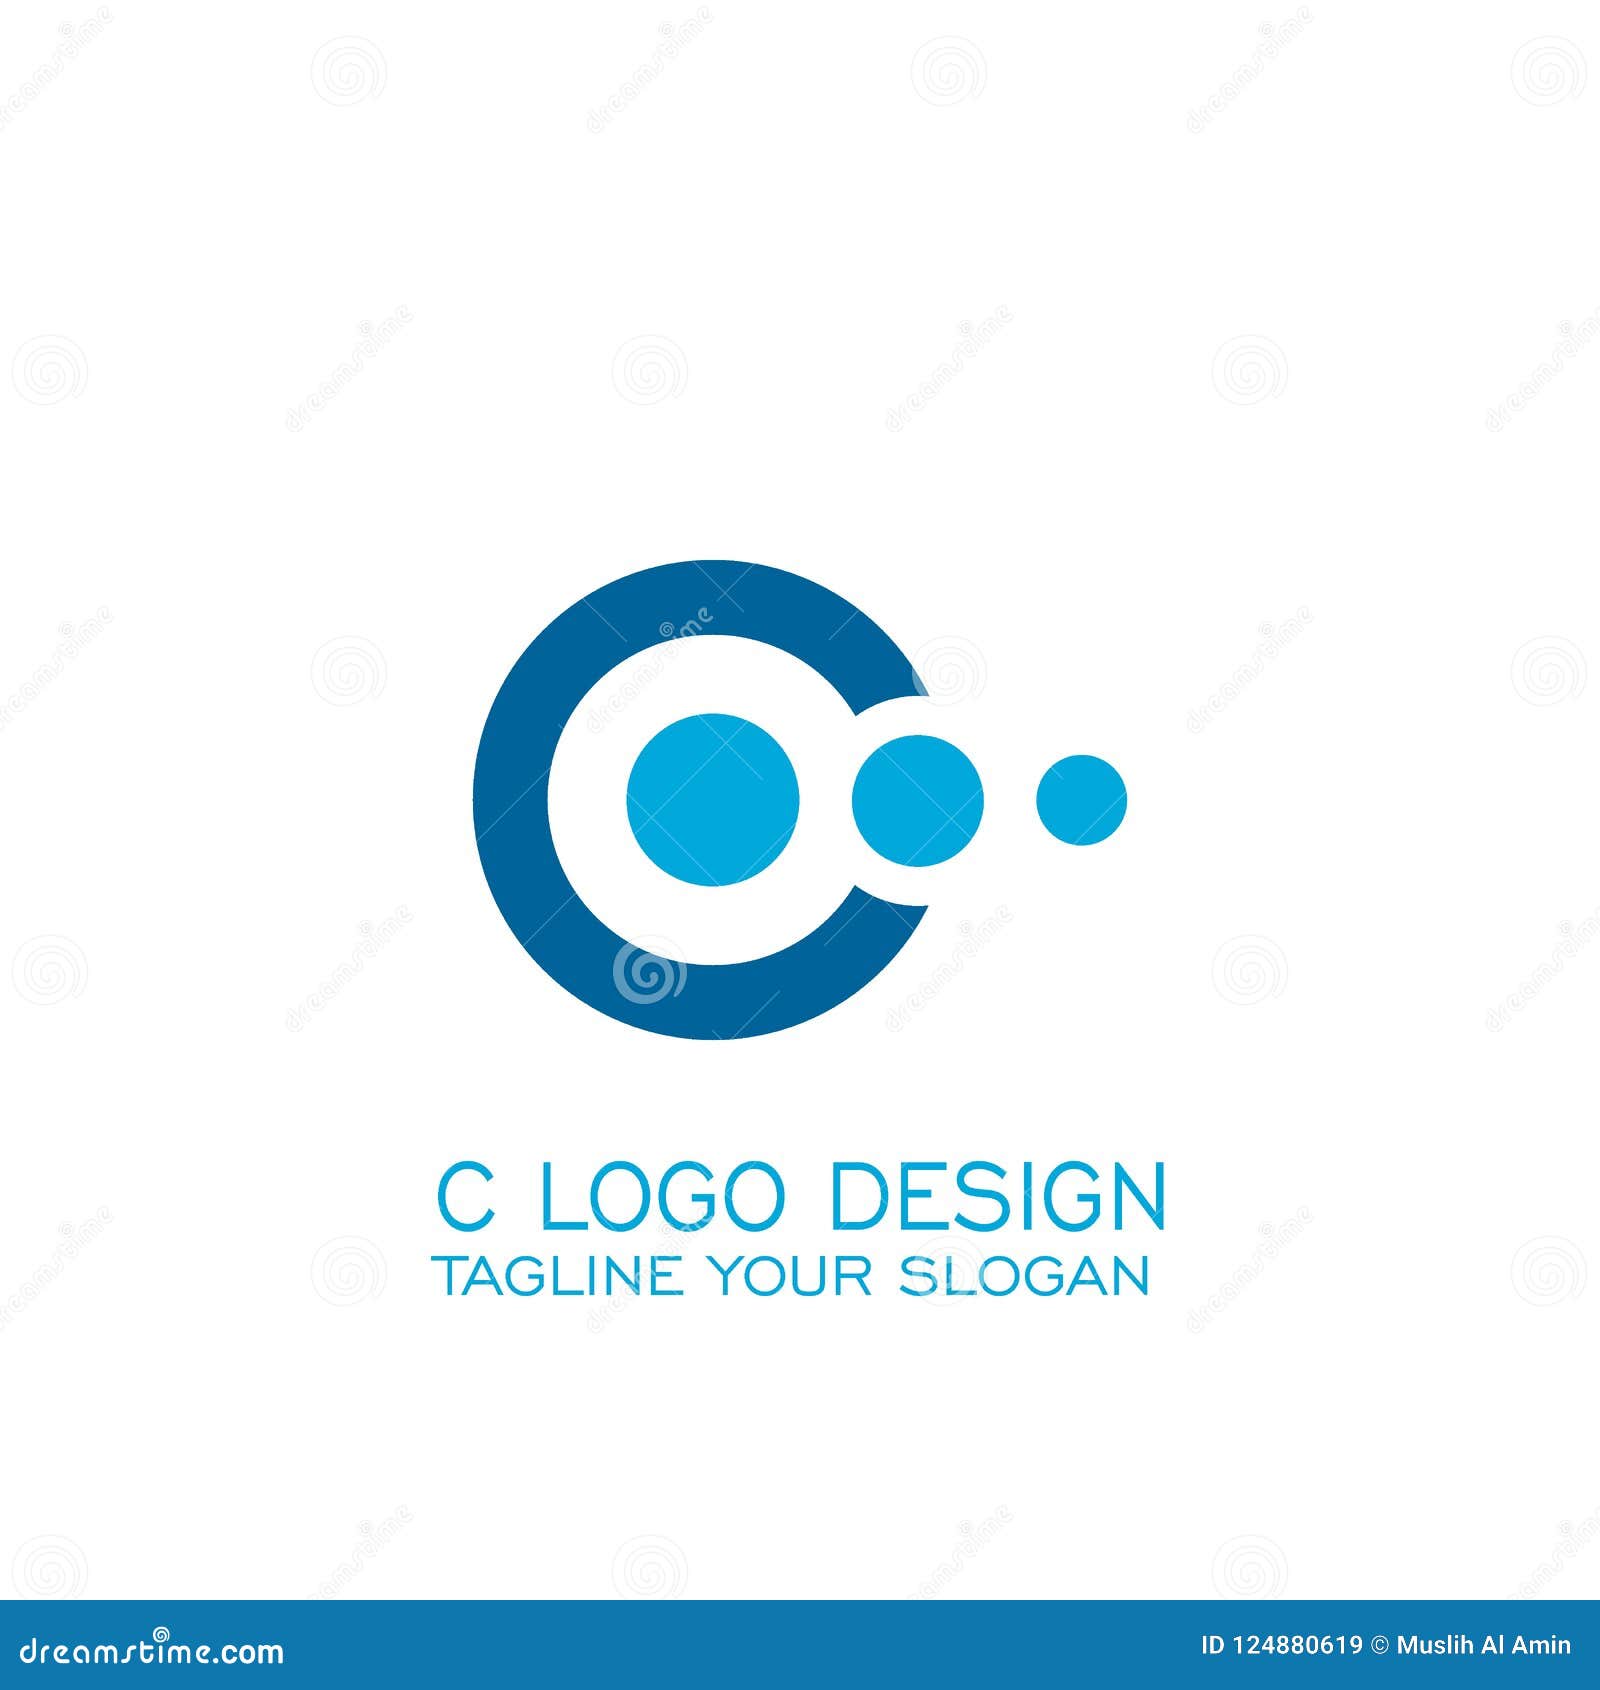 Connecting Logo Design, C Logo. Stock Vector - Illustration of logotype ...